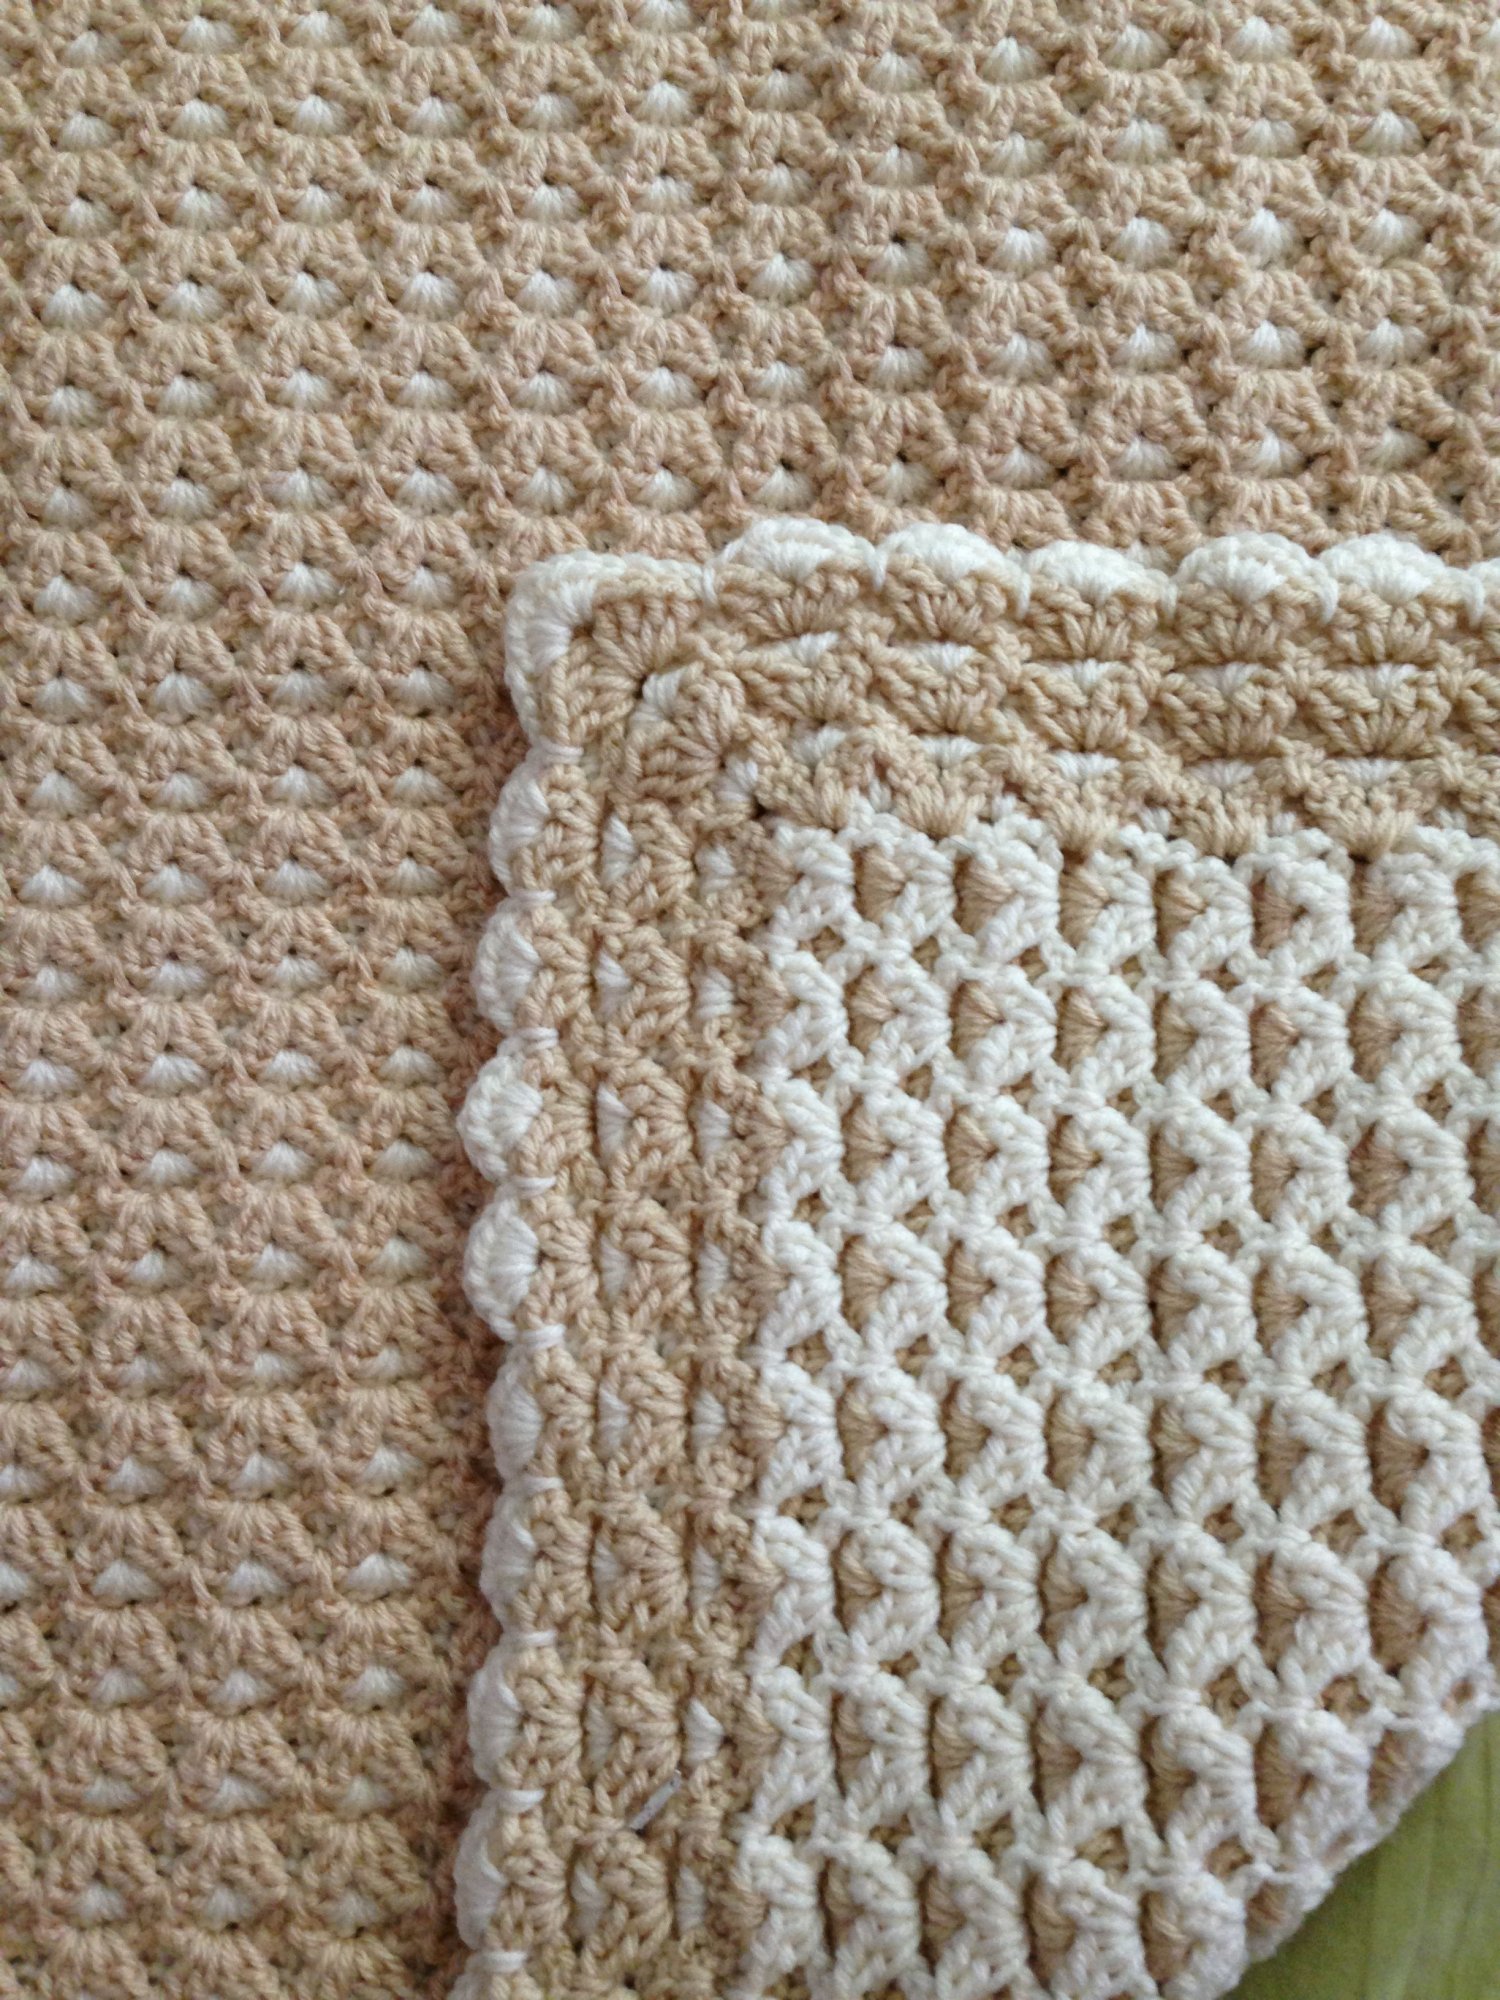 Double sided crochet patterns